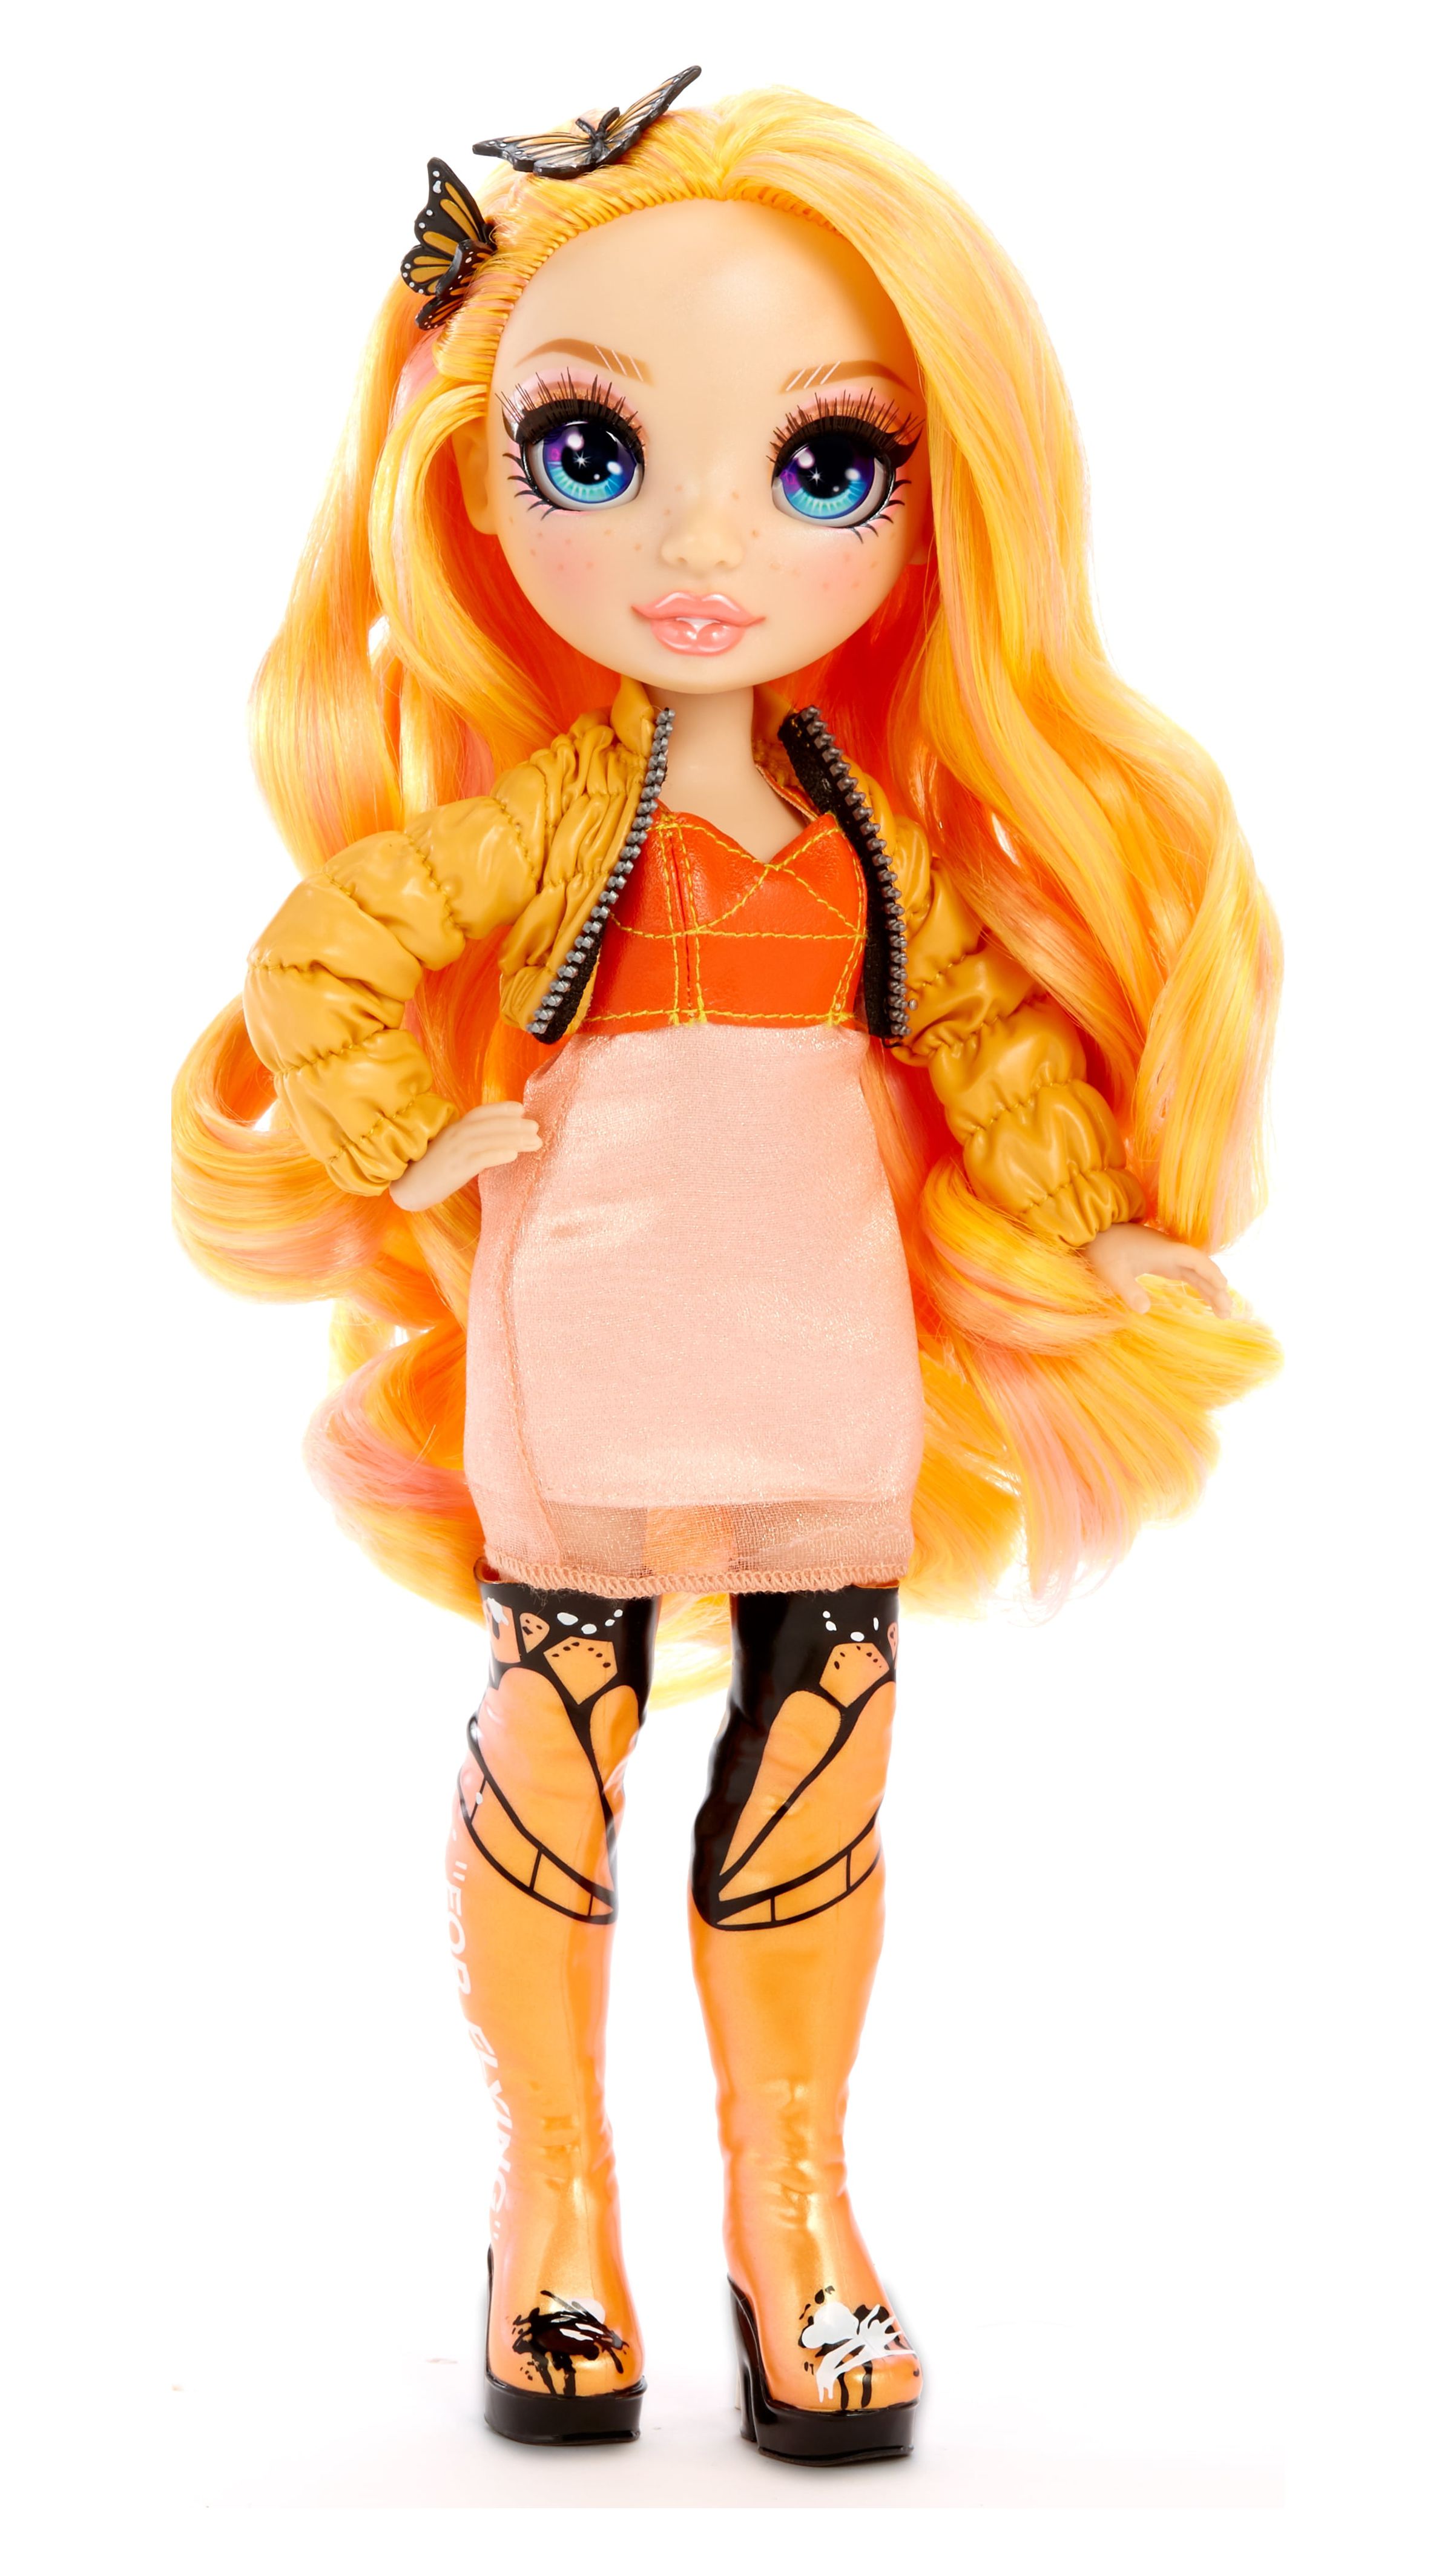 Rainbow High Poppy Rowan – Orange Fashion Doll with 2 Outfits - image 1 of 9